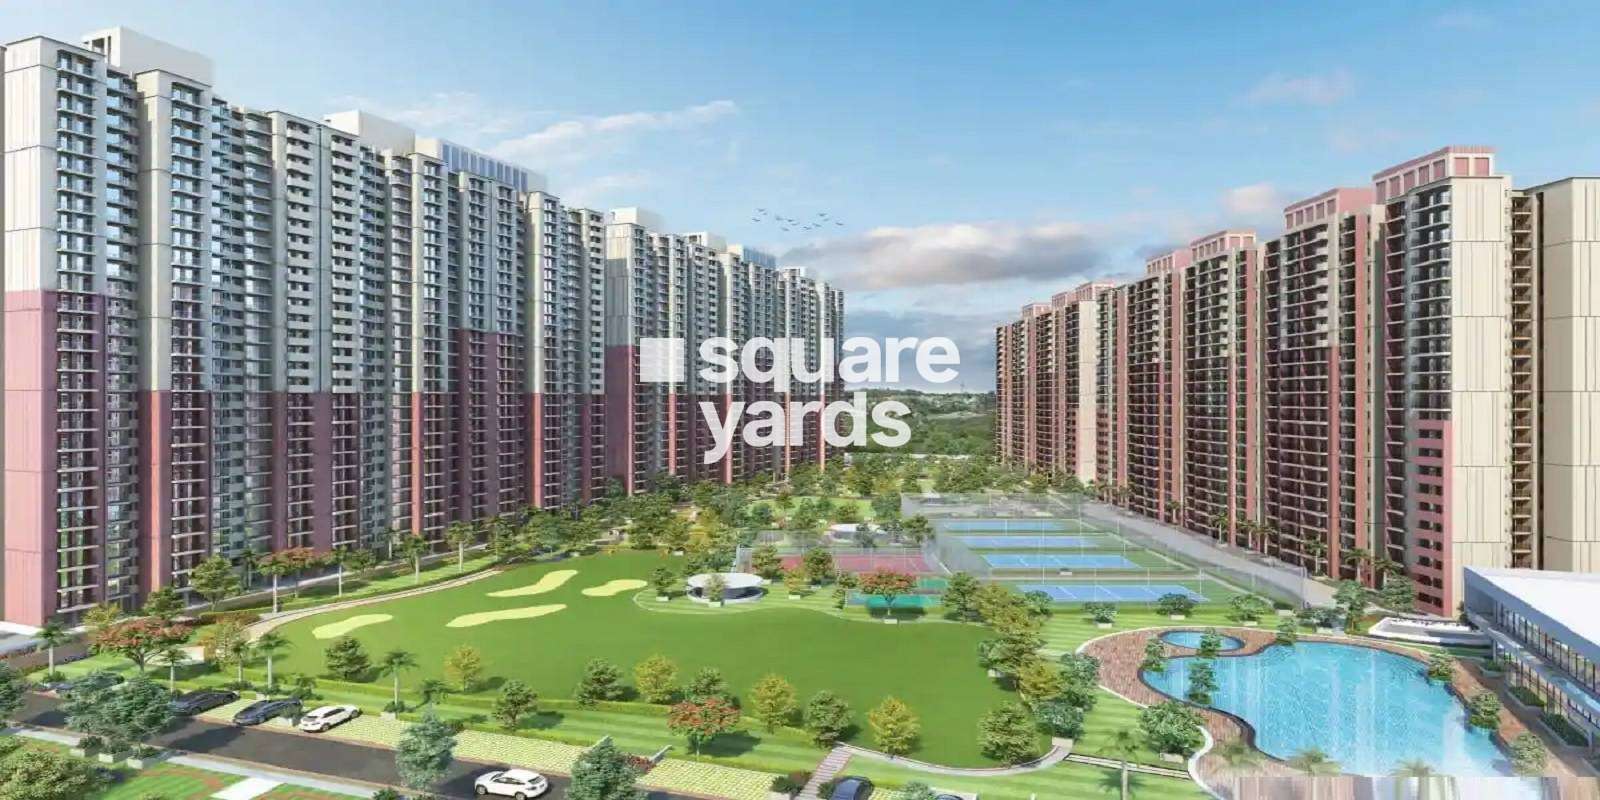 Tata Eureka Park Phase 2 Cover Image